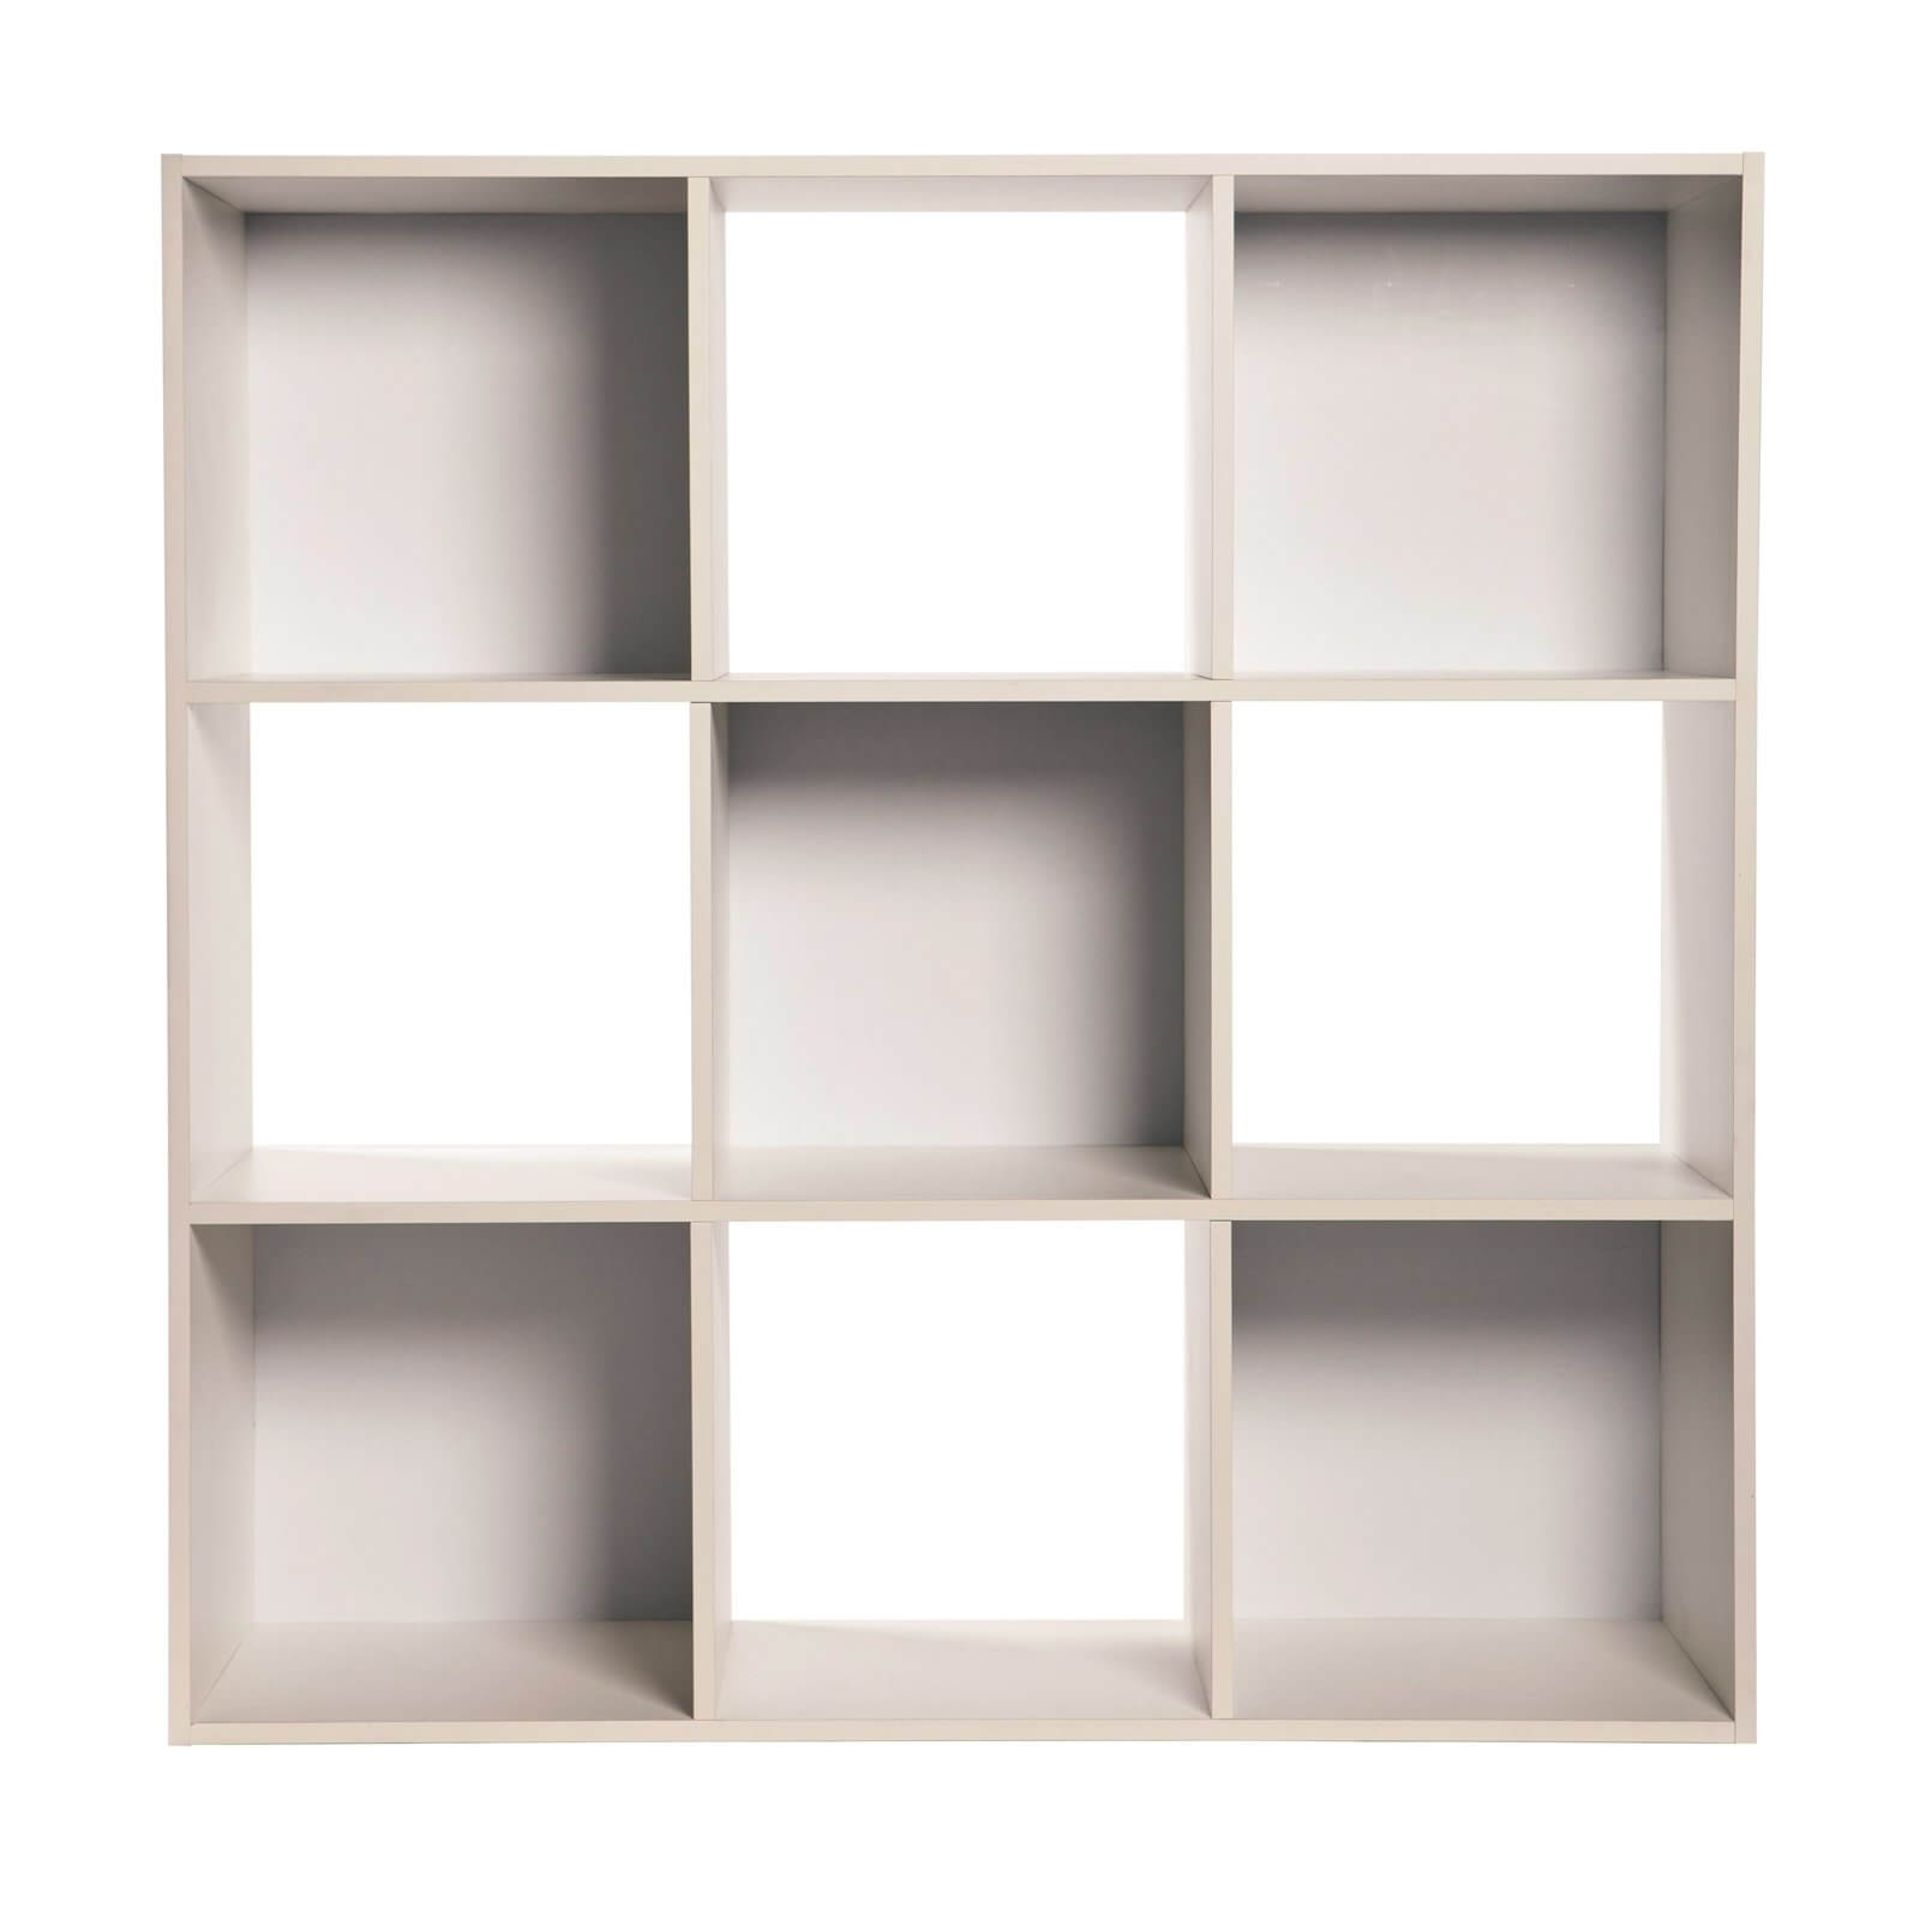 (R7K) 1 X Clever Cube Compact 3x3 Cube Storage Unit. White Matt Finish (H910 x W910 x D295mm)